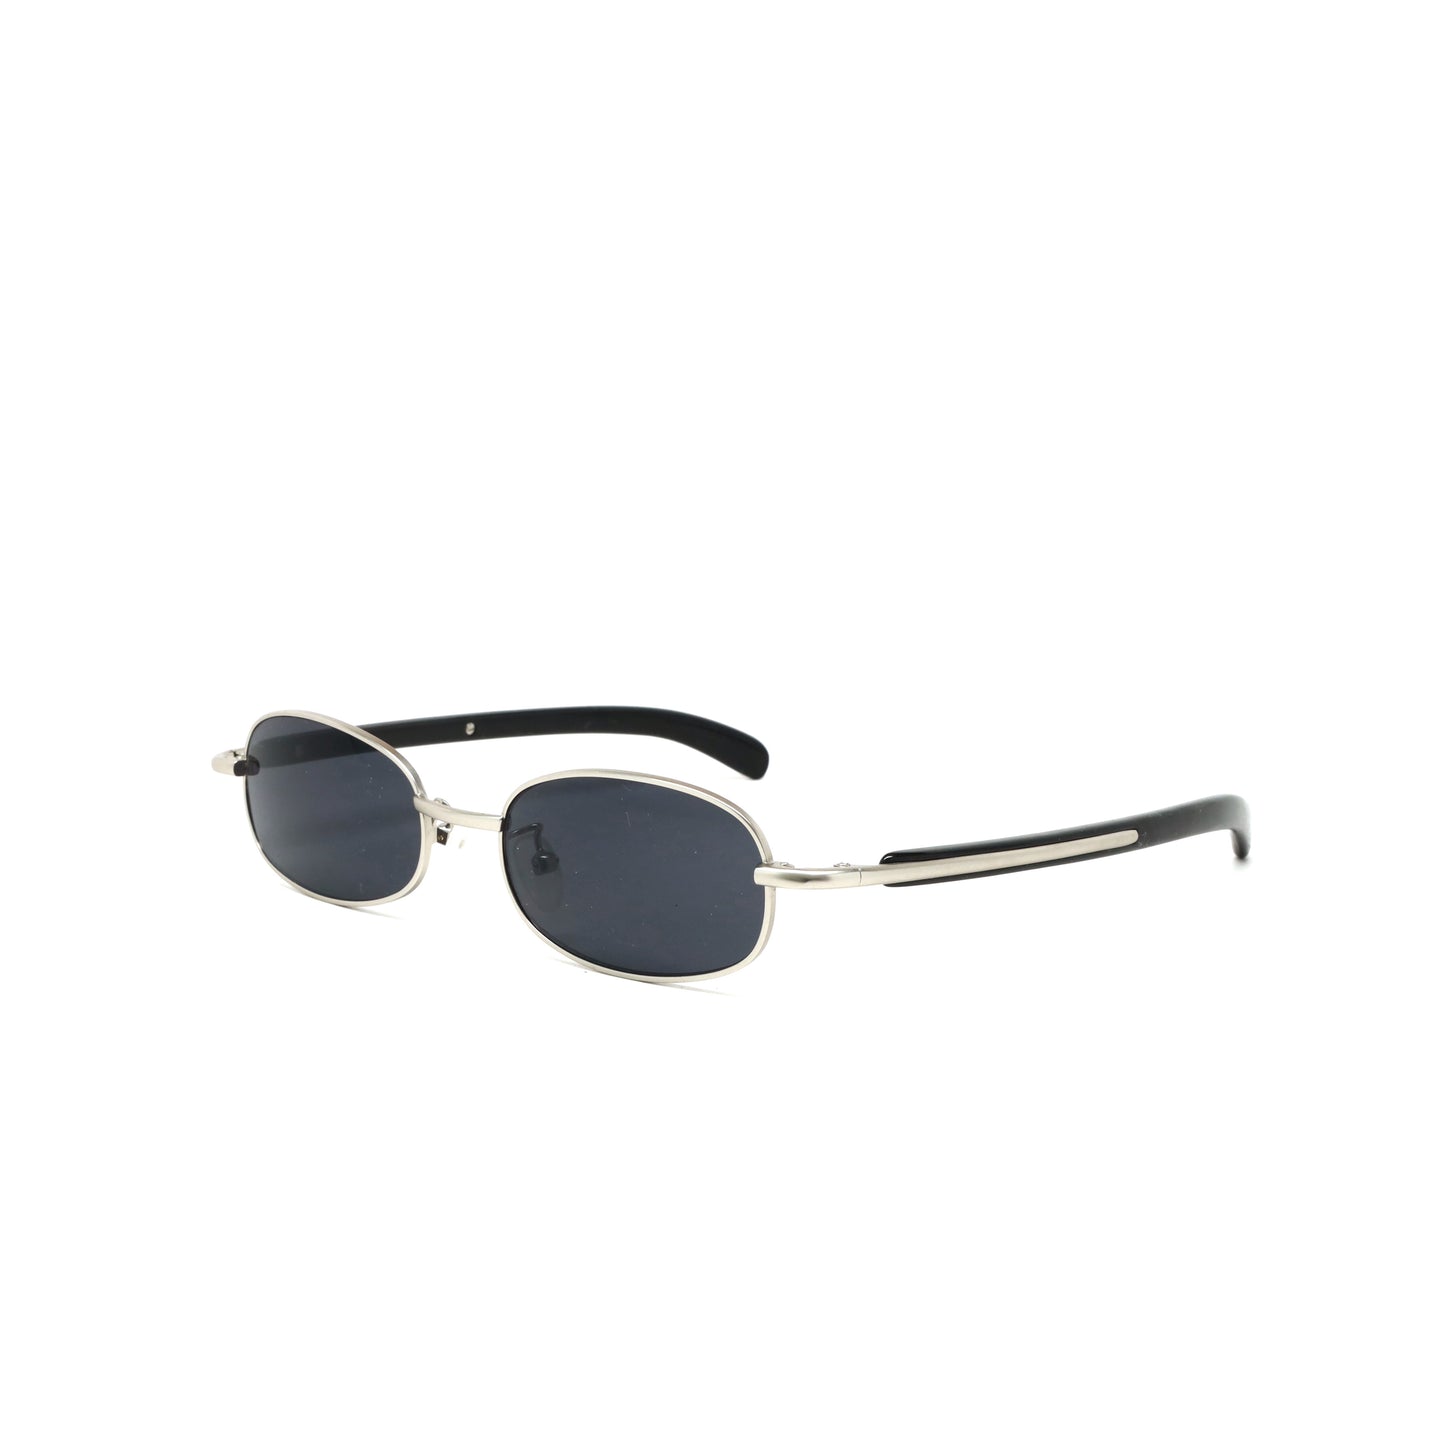 Vintage 90s Small Size Narrow Frame Wraparound  Sunglasses - Silver